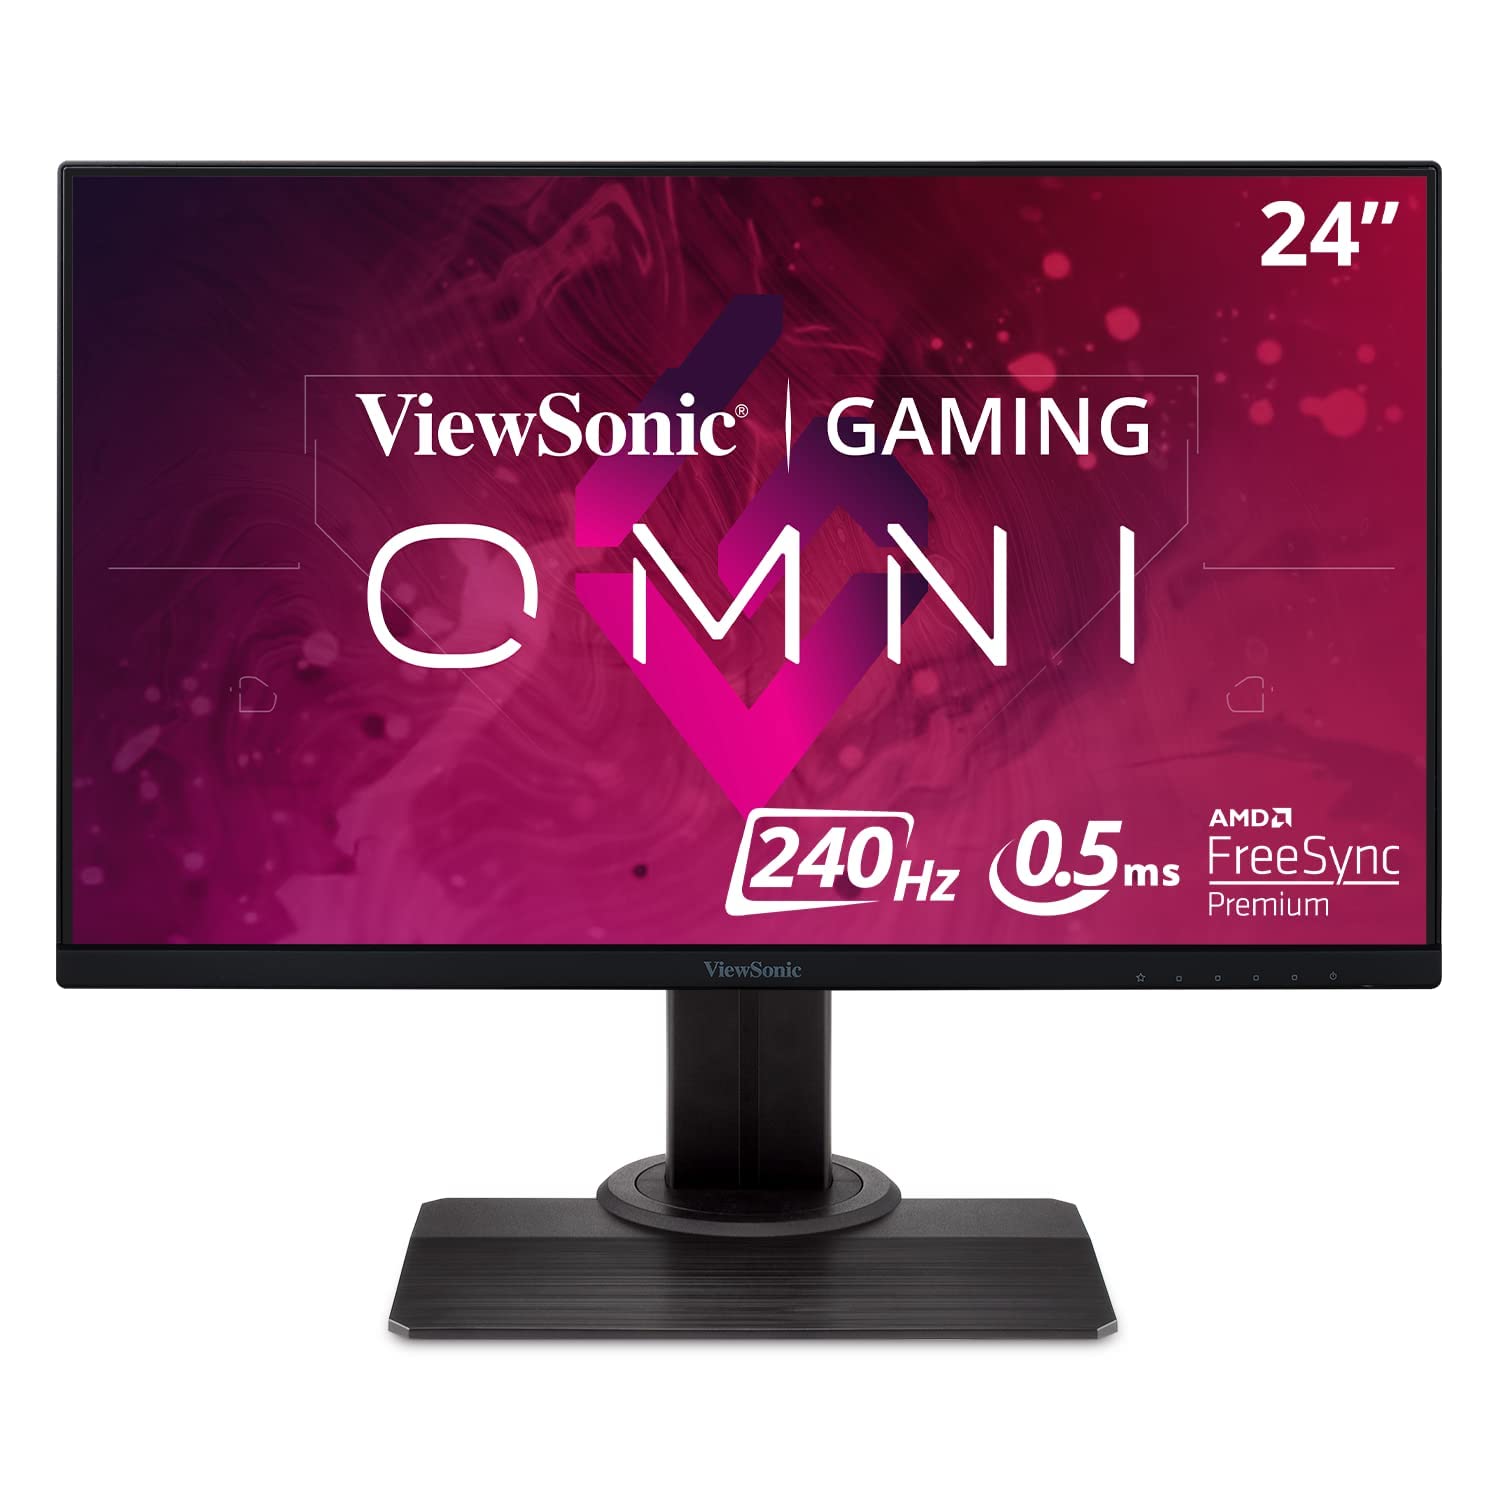 Viewsonic OMNI XG2431 24 Inch 1080p 0.5ms 240Hz Gaming Monitor with AMD FreeSync Premium, Advanced Ergonomics, Eye Care, HDMI and DisplayPort for Esports